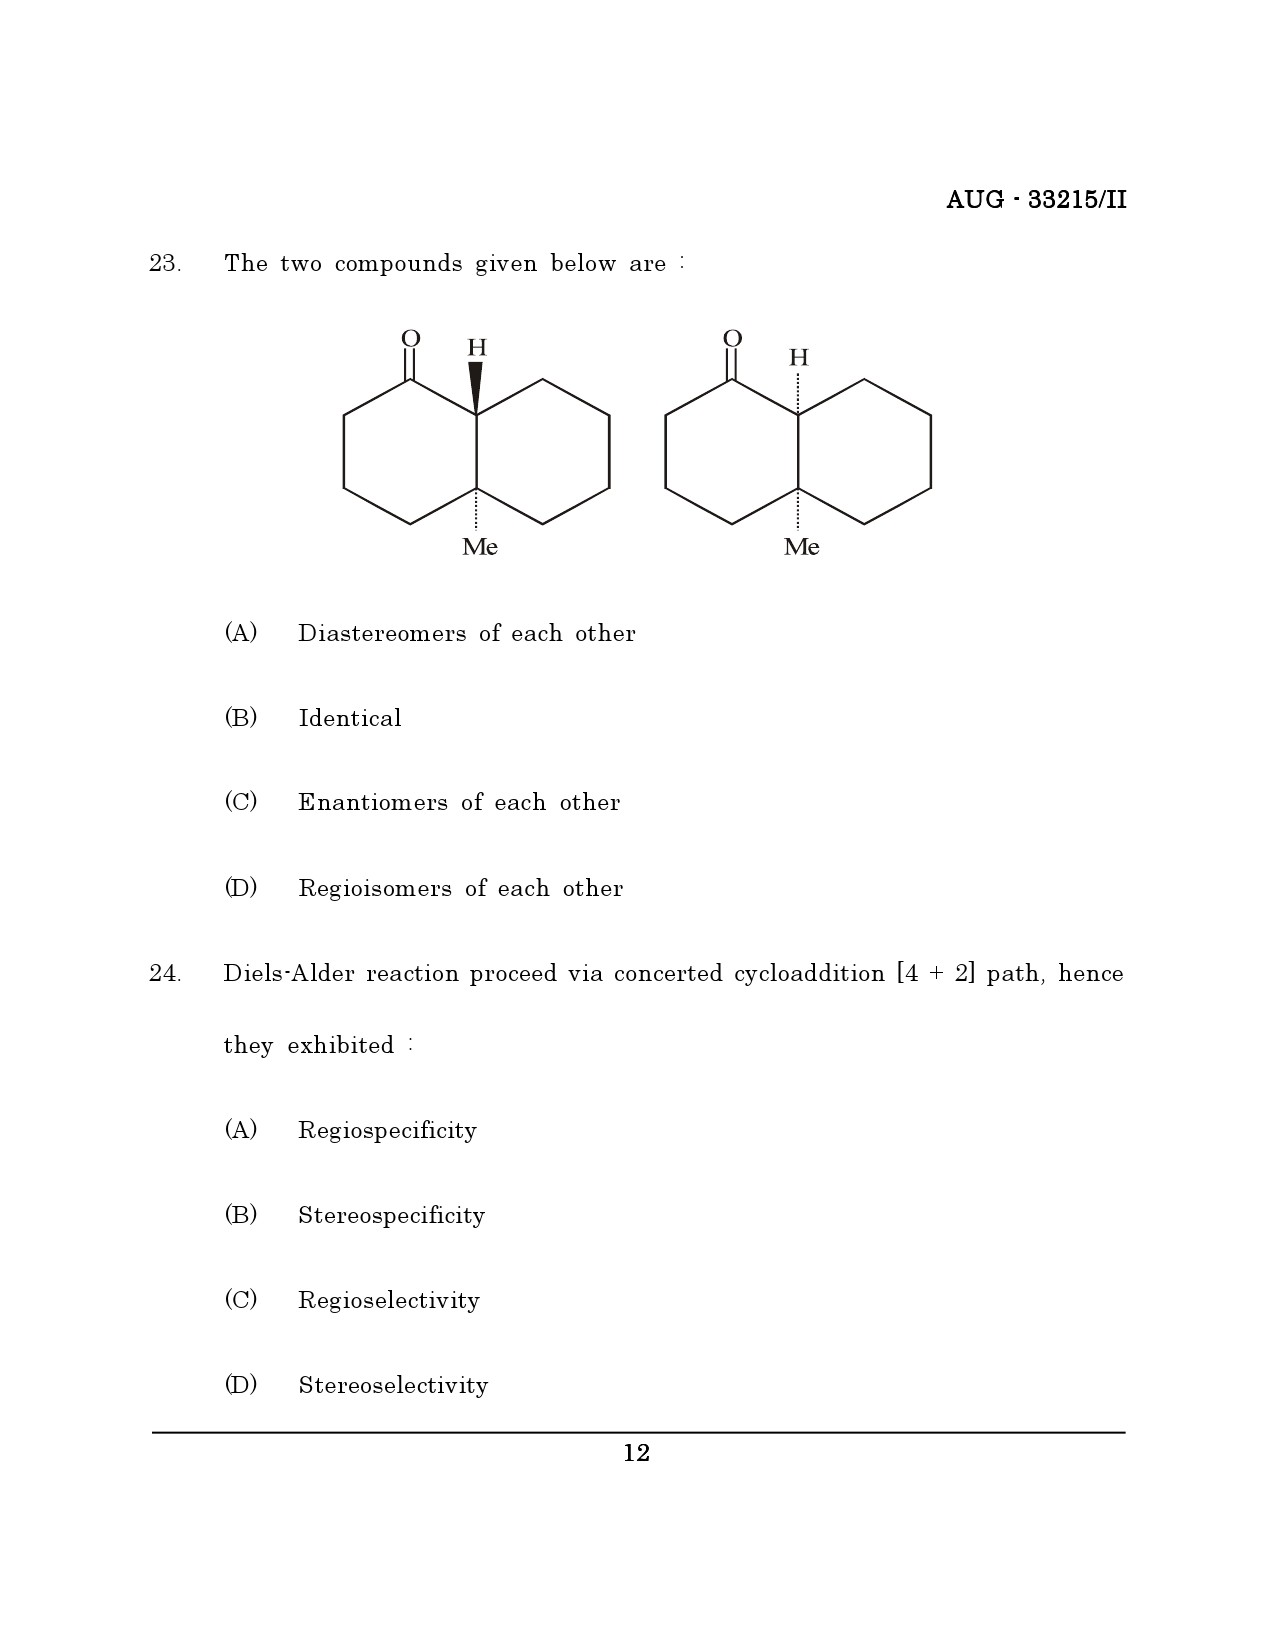 Maharashtra SET Chemical Sciences Question Paper II August 2015 11